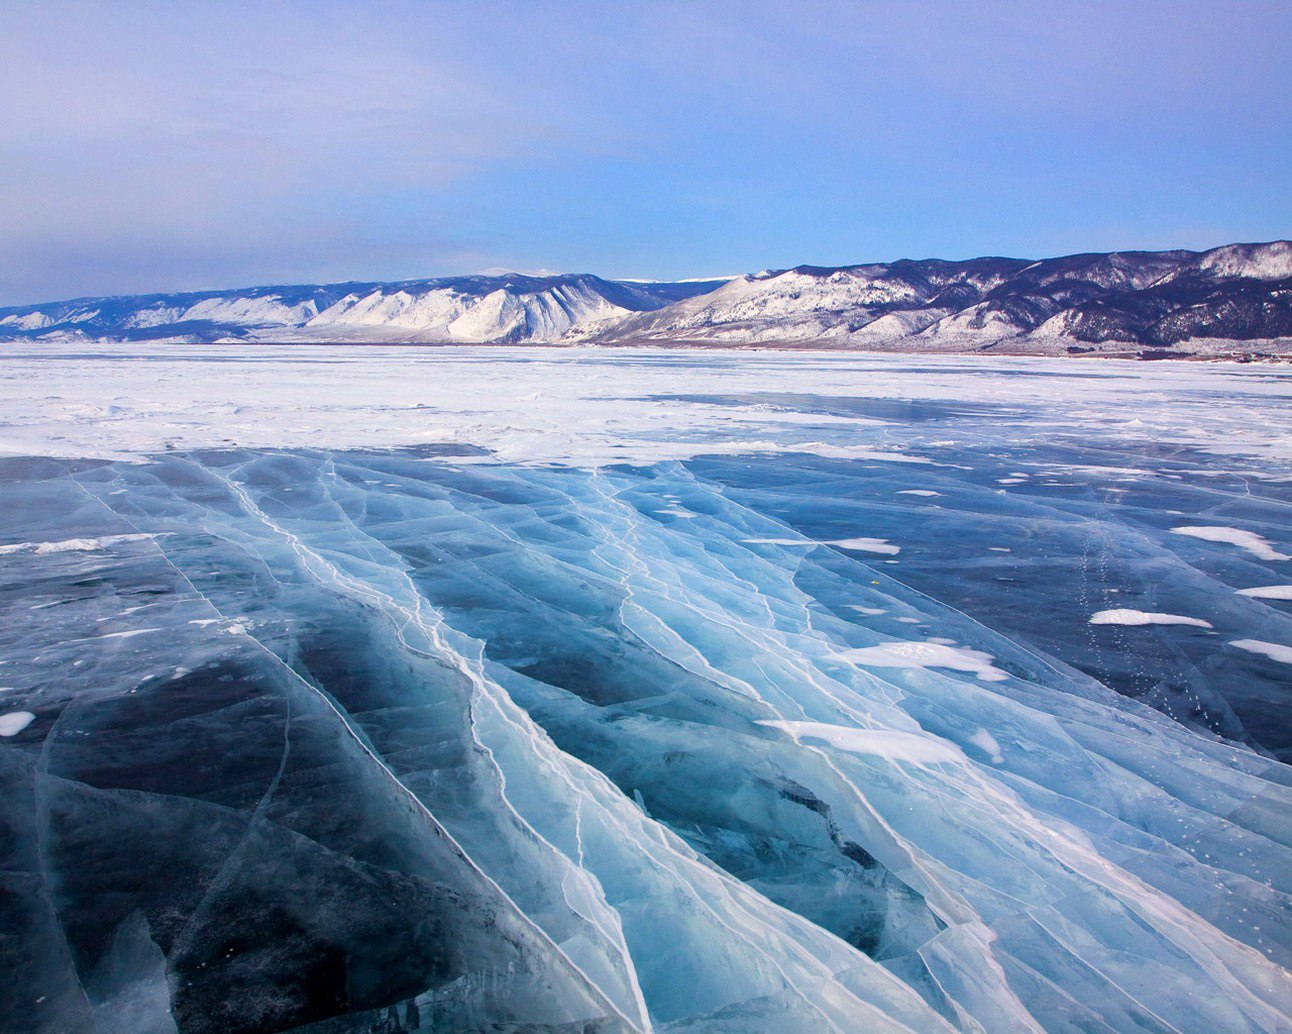 Lake Baikal water level under critical limit - Strange Sounds